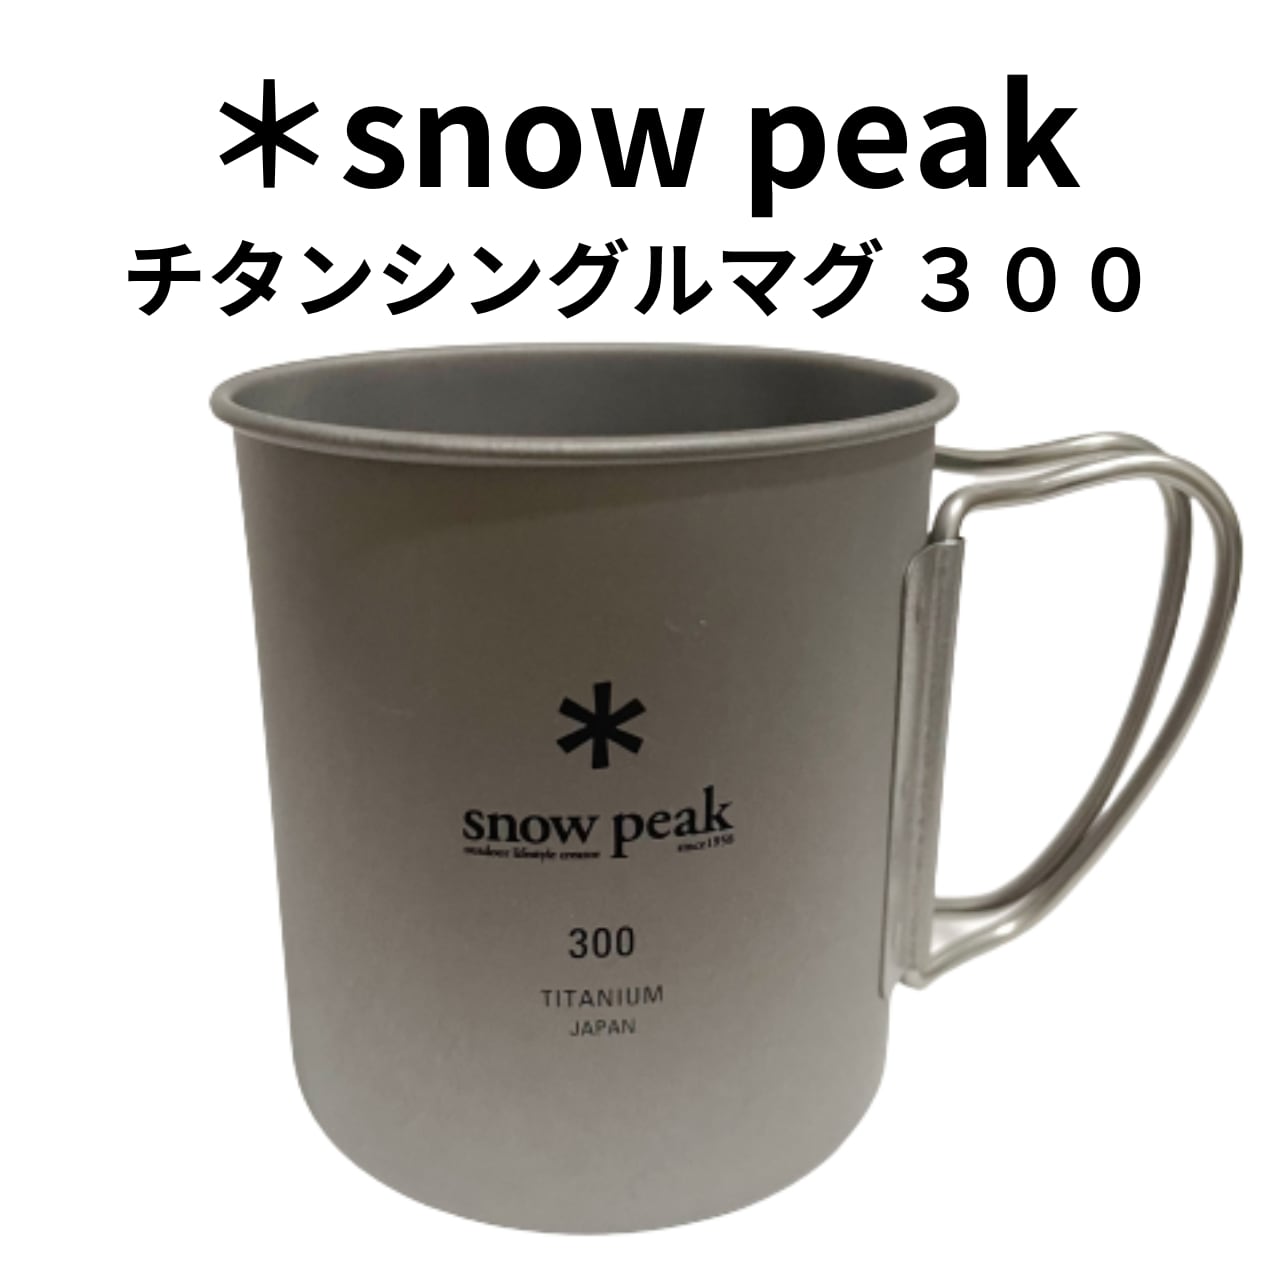 snowpeak チタンシングルマグ 300 MG-142 マグ スノーピーク